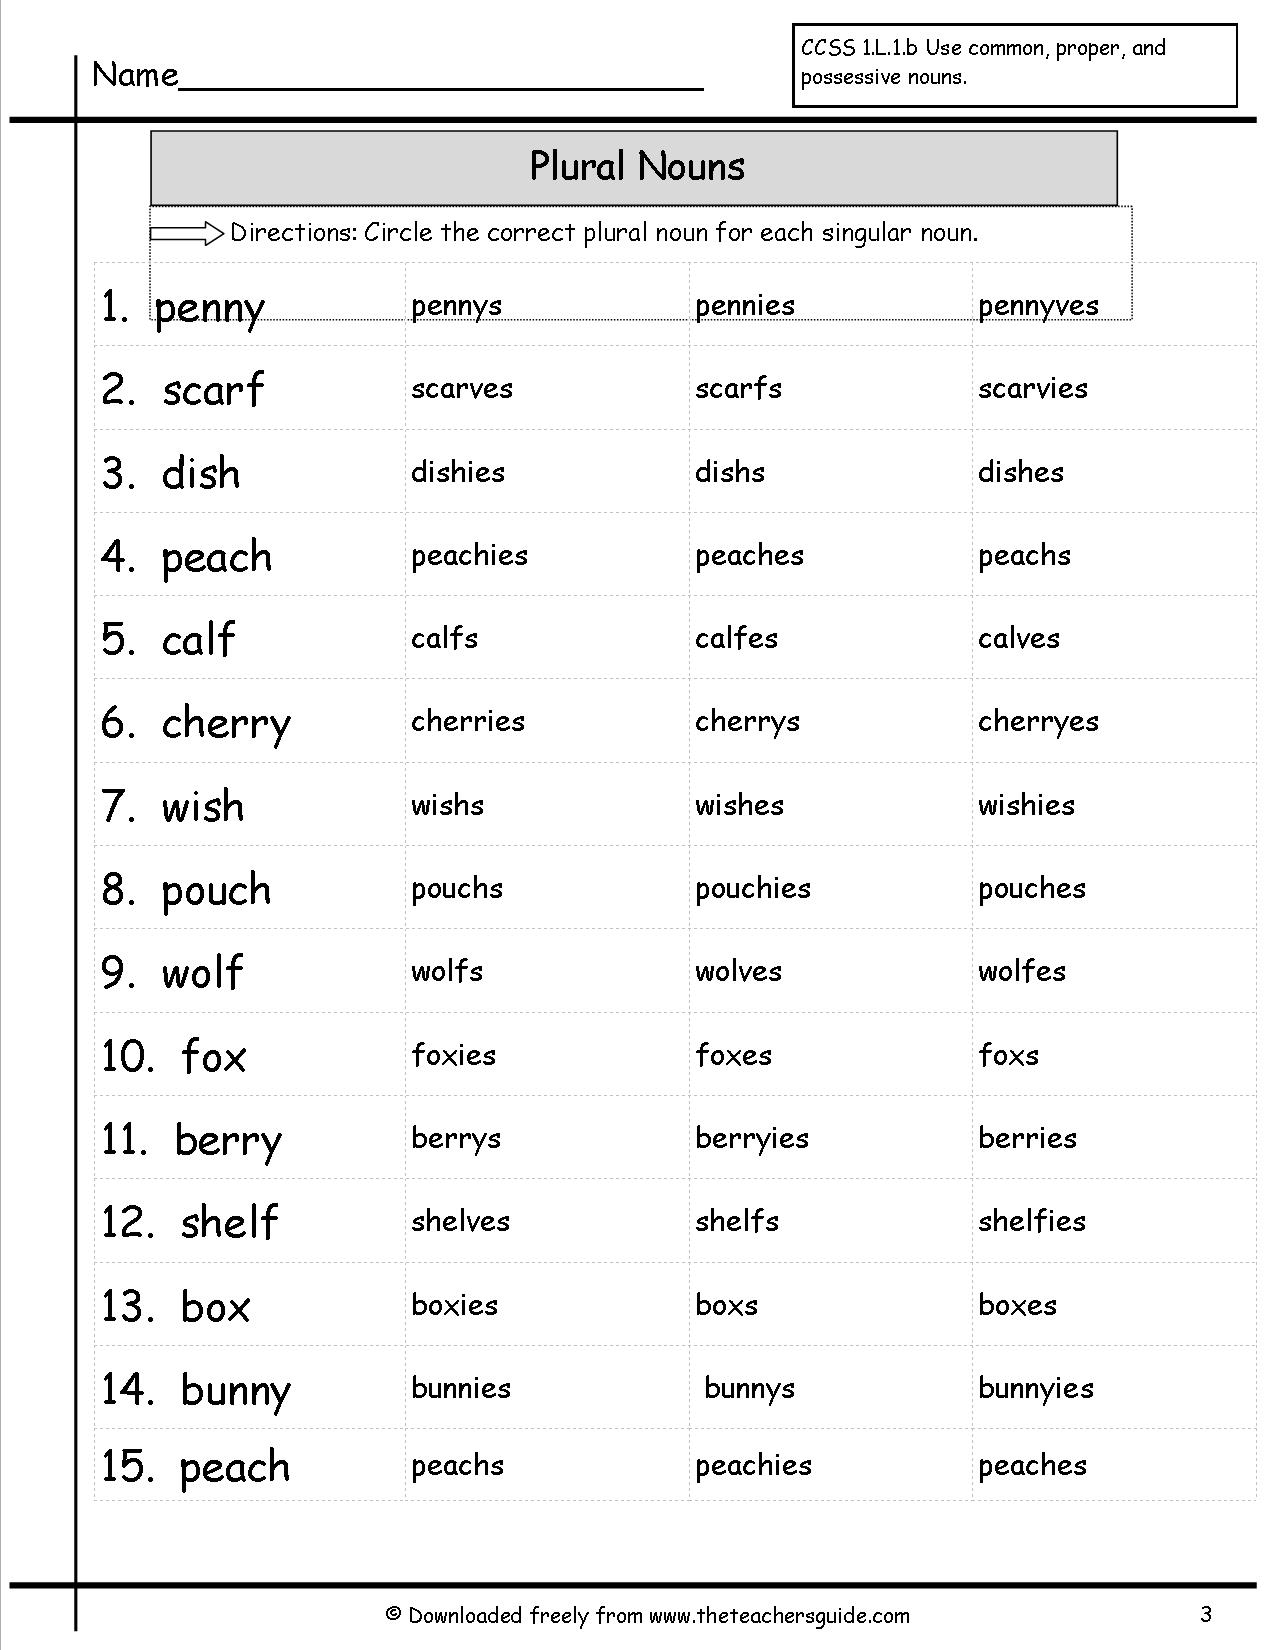 Plural Nouns IES Worksheet